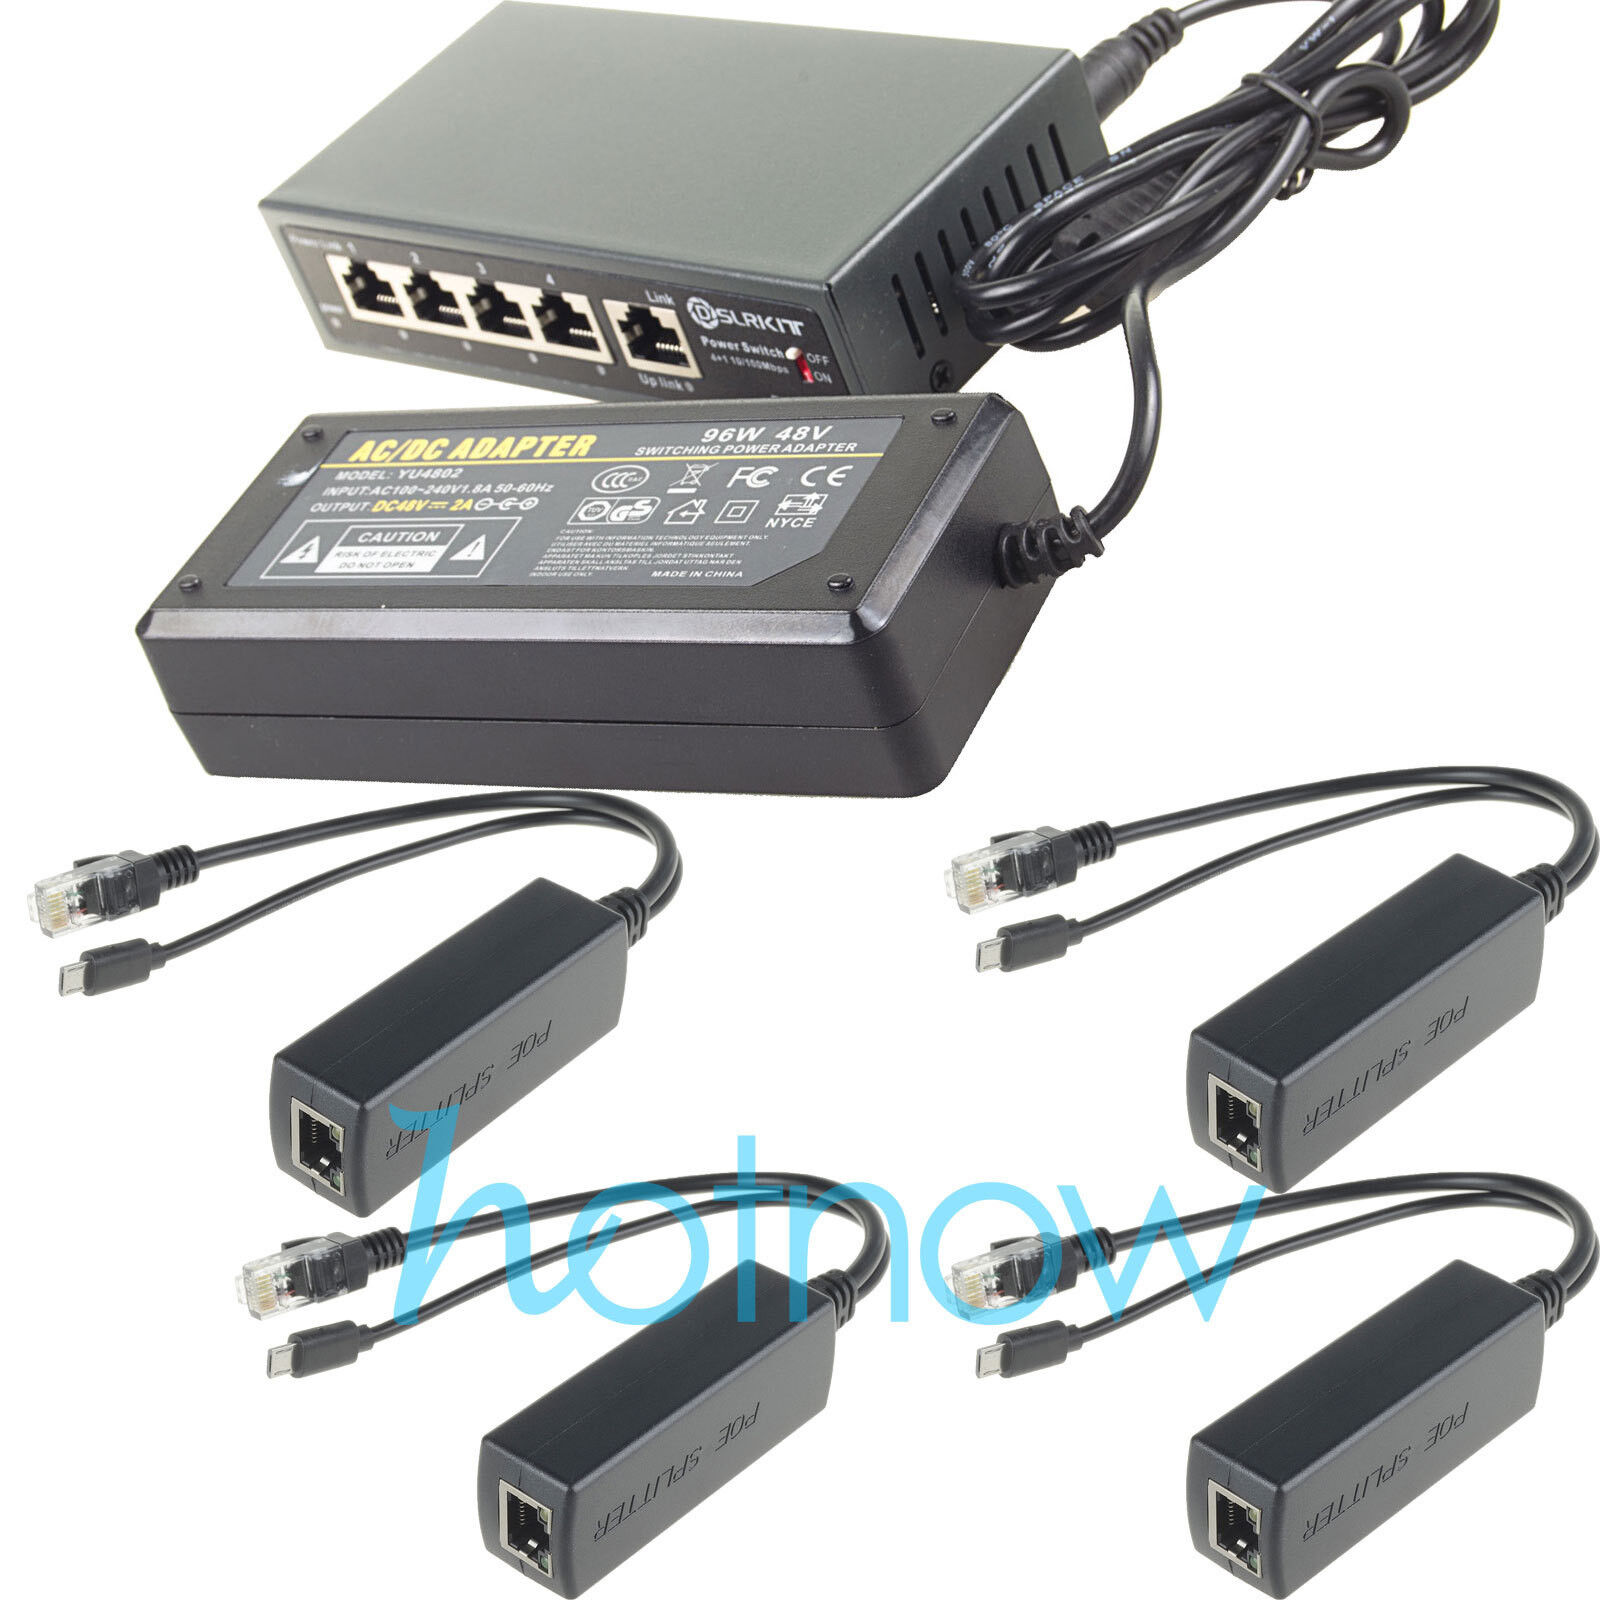 250M EXTEND PoE Kit for 4x Raspberry Pi B/B+/2/3 Micro USB 5V 2.4A /Switch 4 PoE